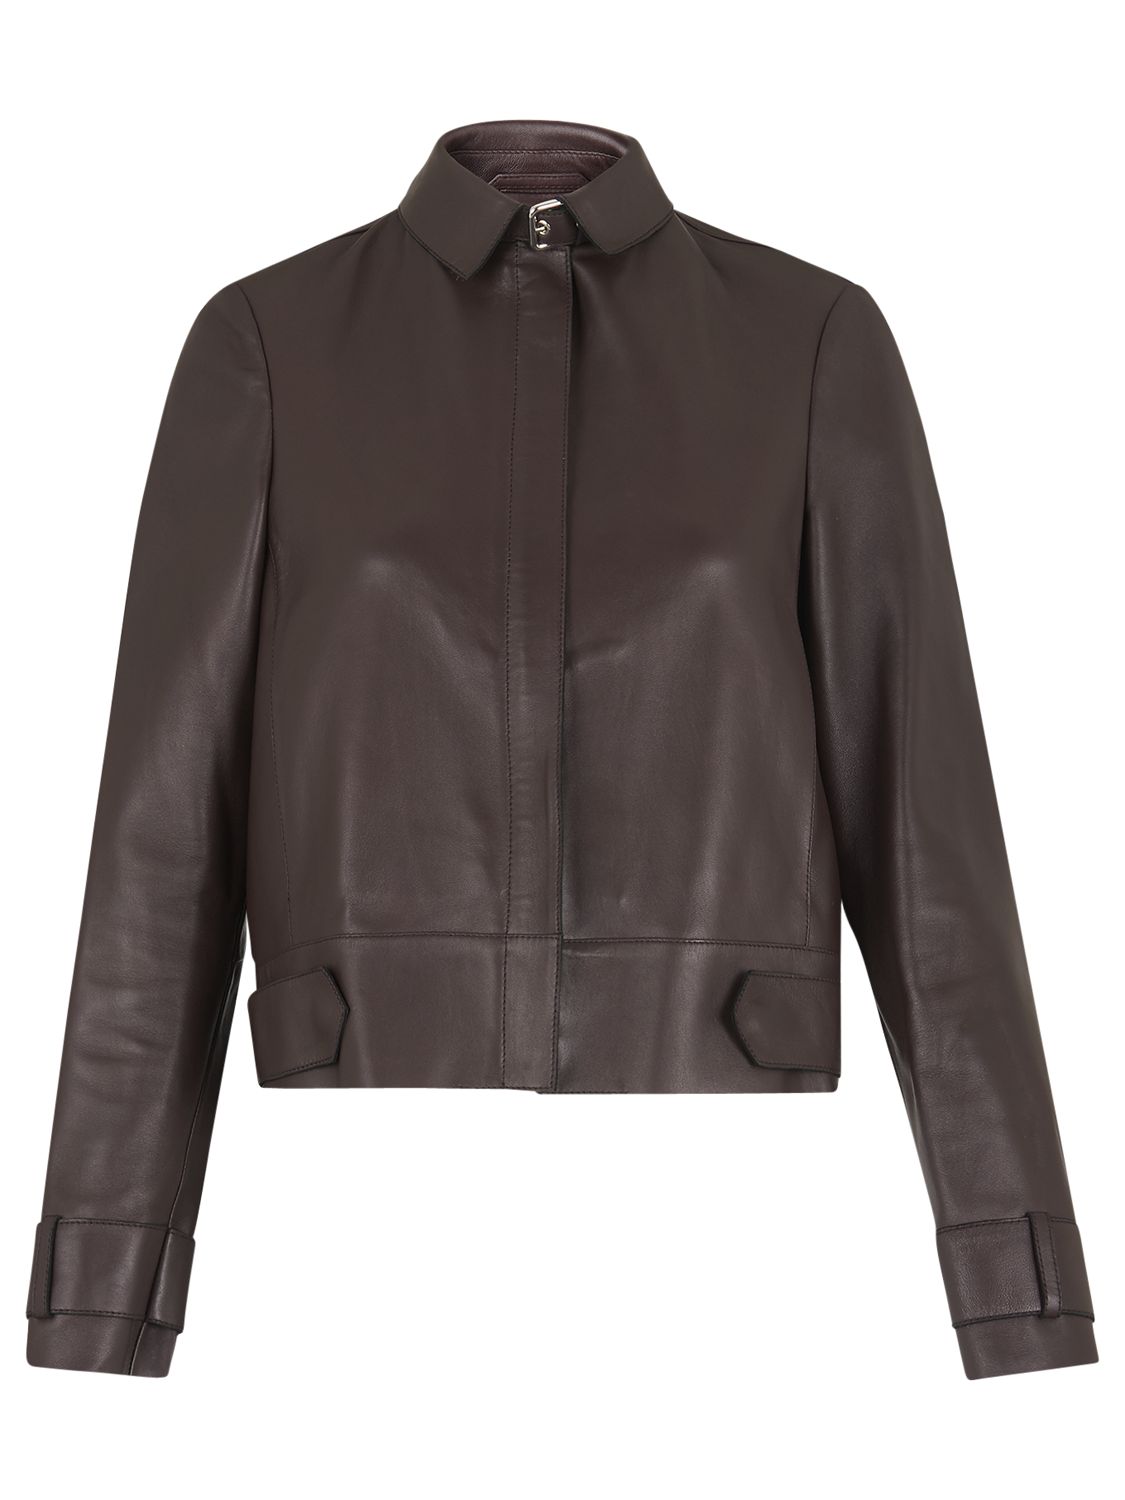 Whistles Bonded Clean Leather Jacket, Burgundy at John Lewis & Partners